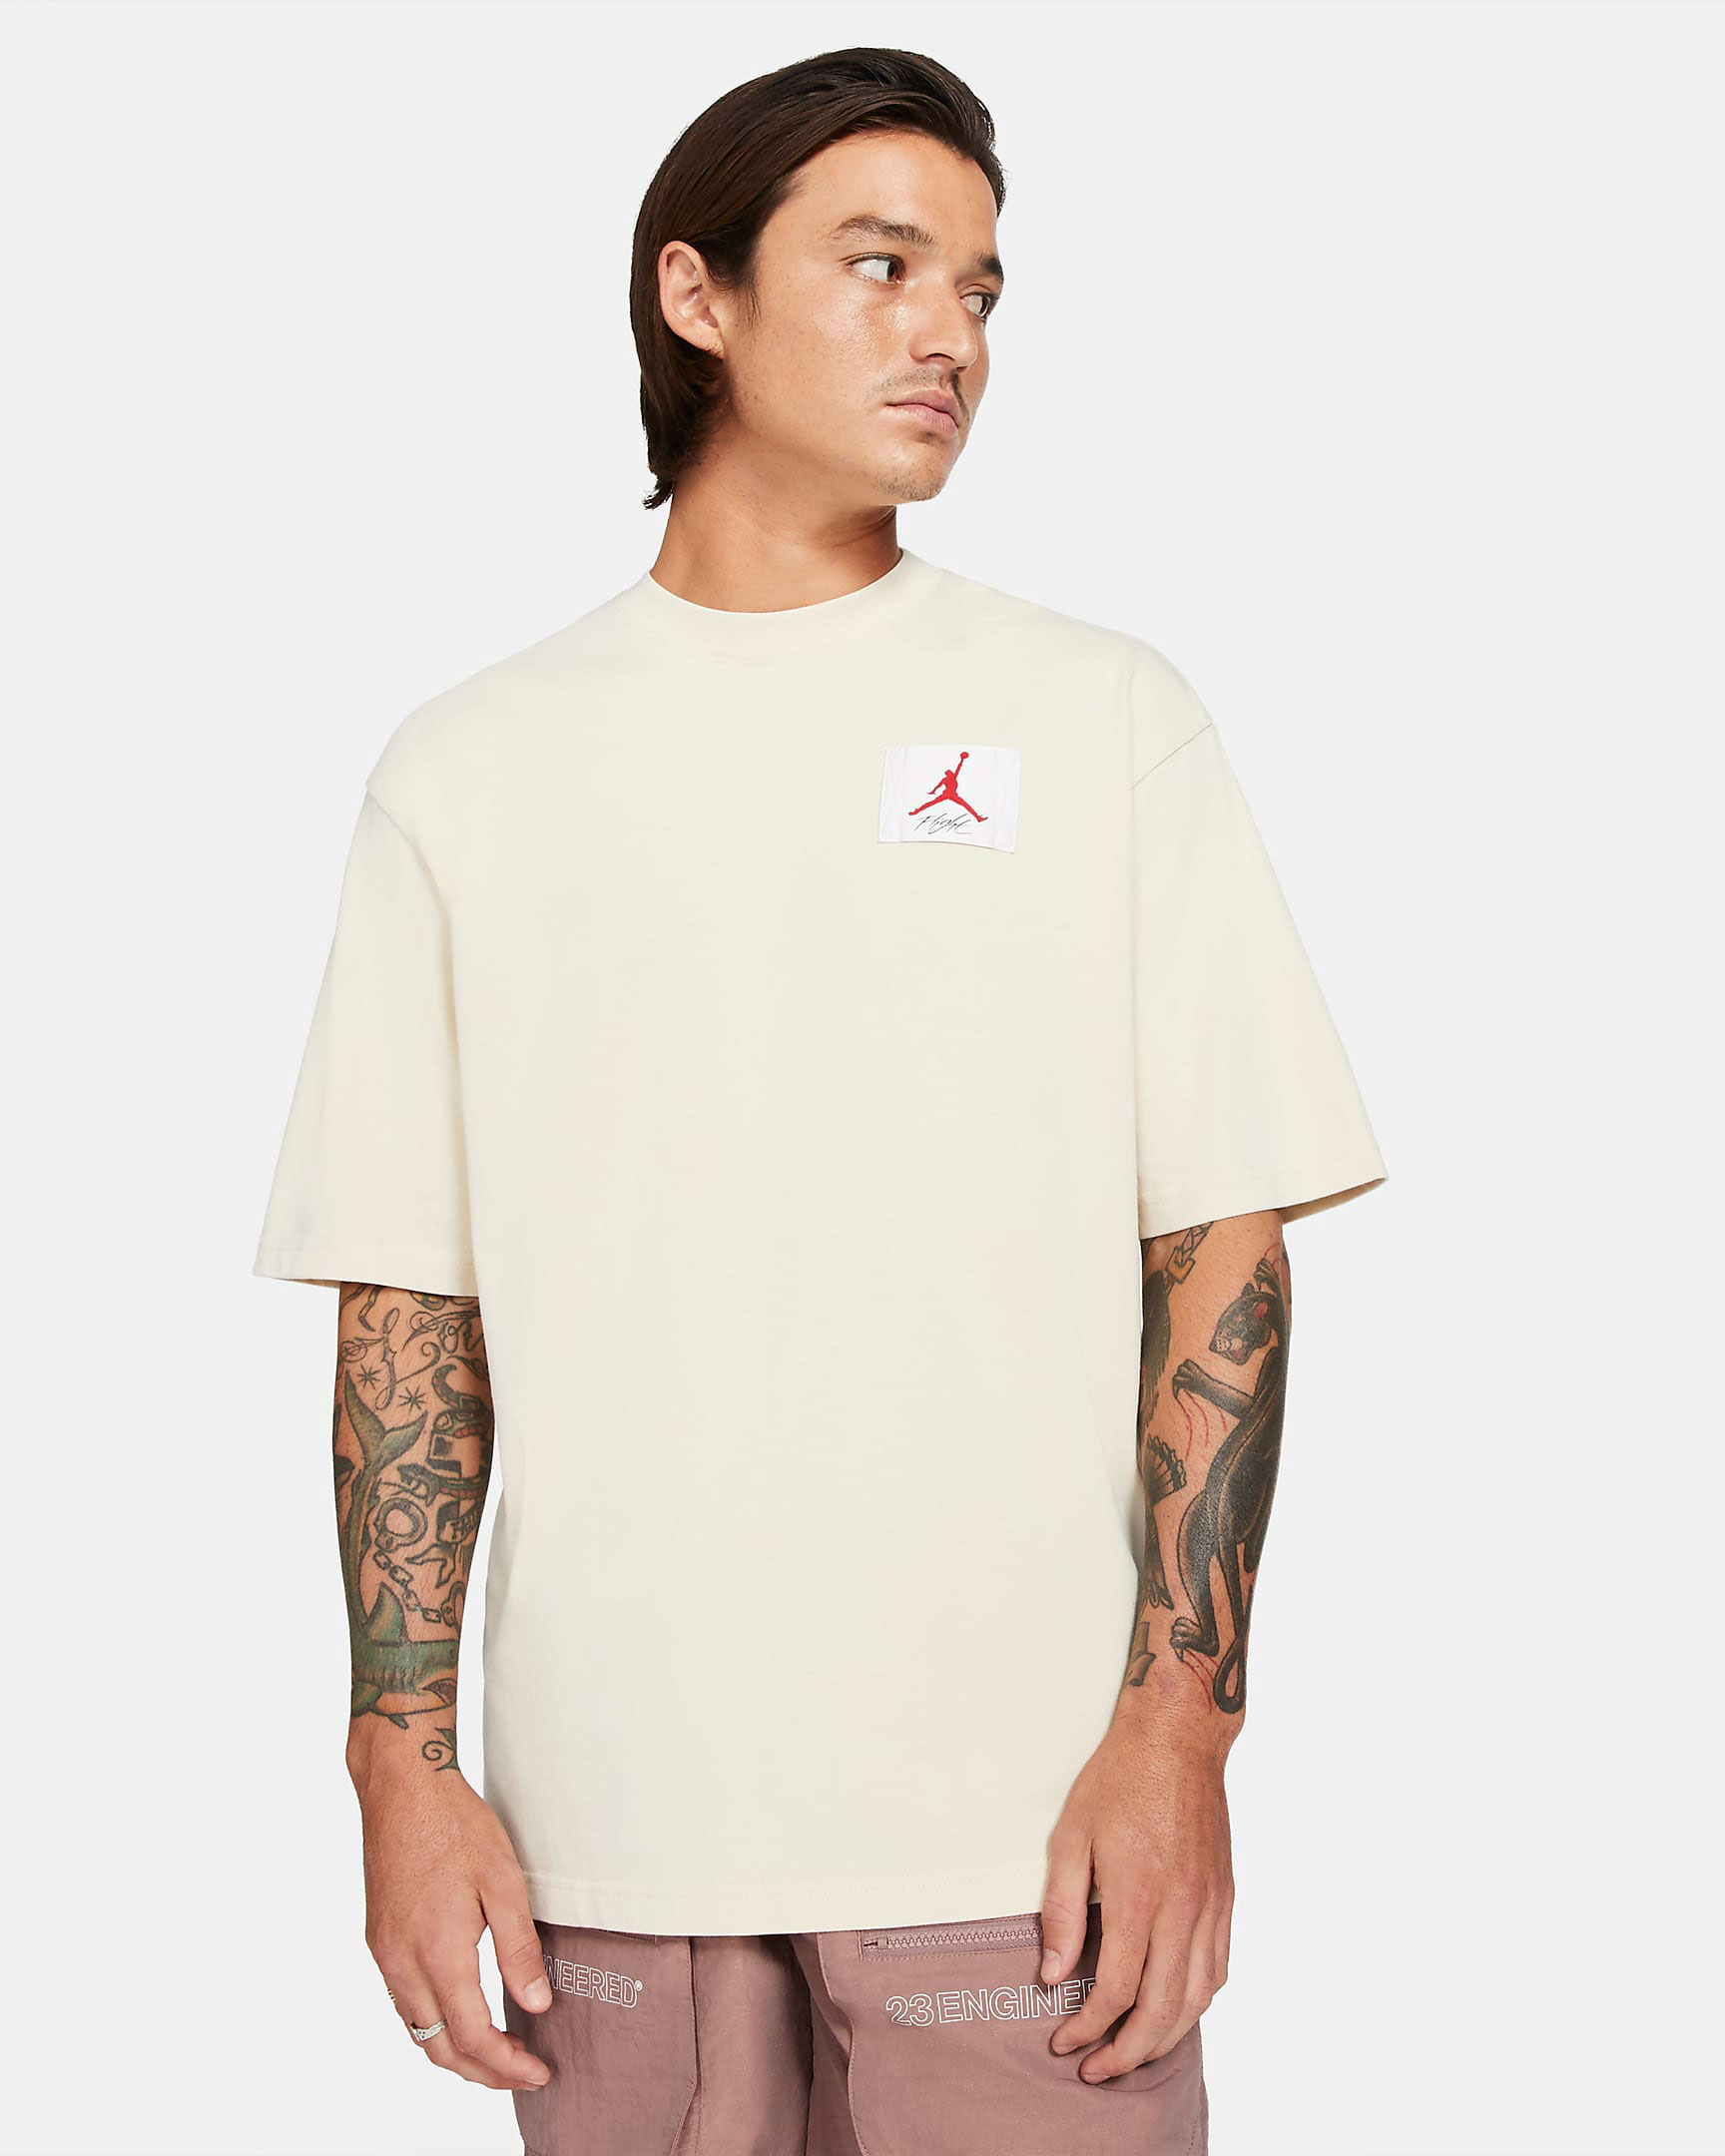 jordan-off-white-sail-shirt-1